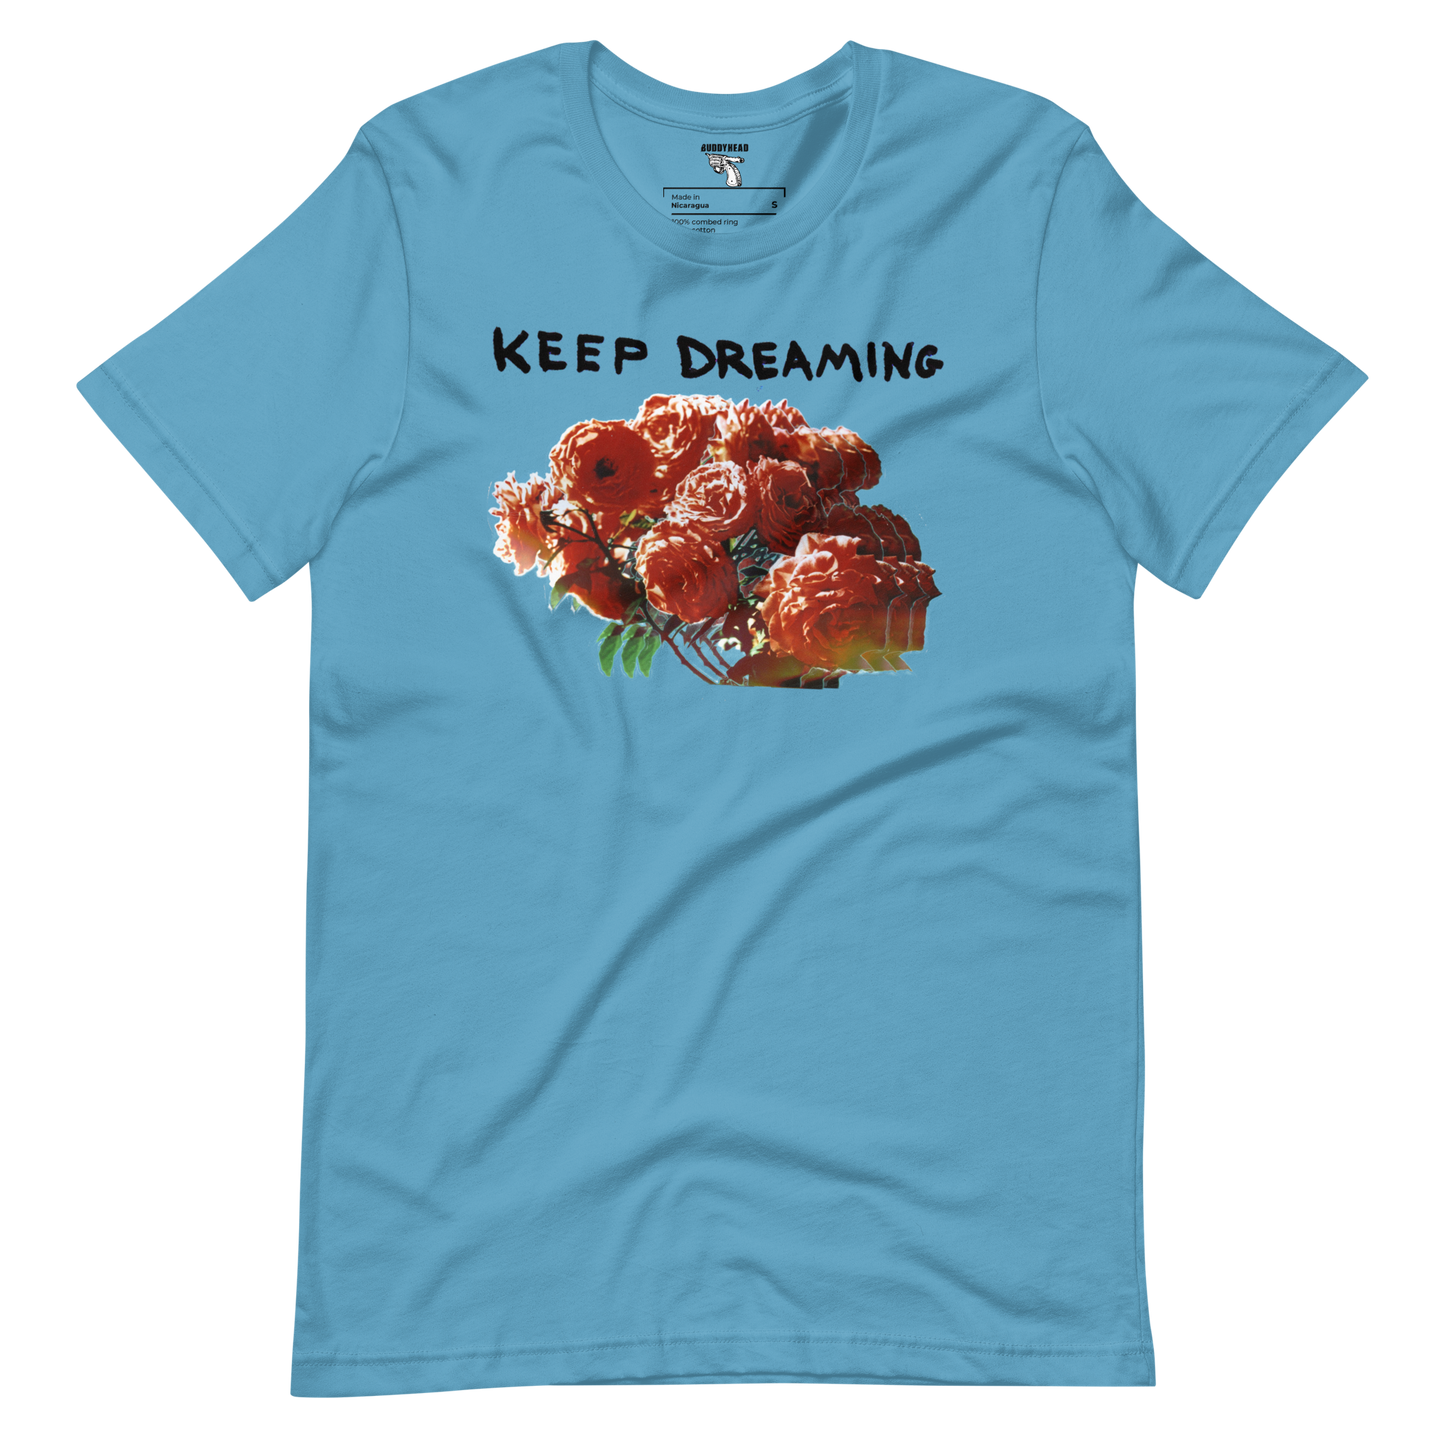 Keep Dreaming tee